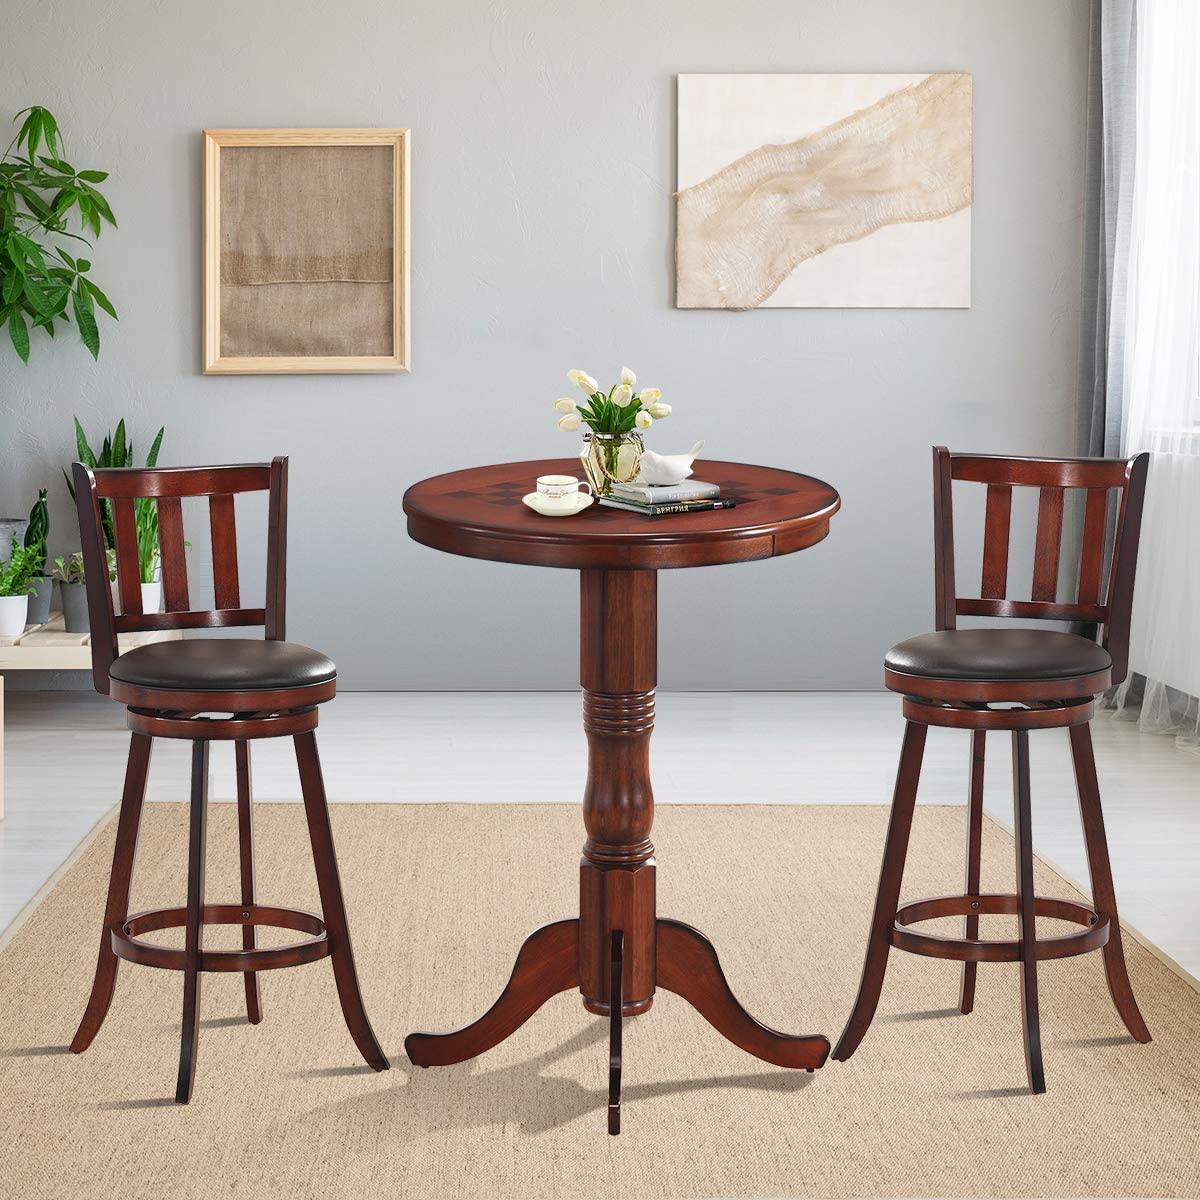 Table 42" Wooden Round Pub Pedestal Side Table - Giantexus